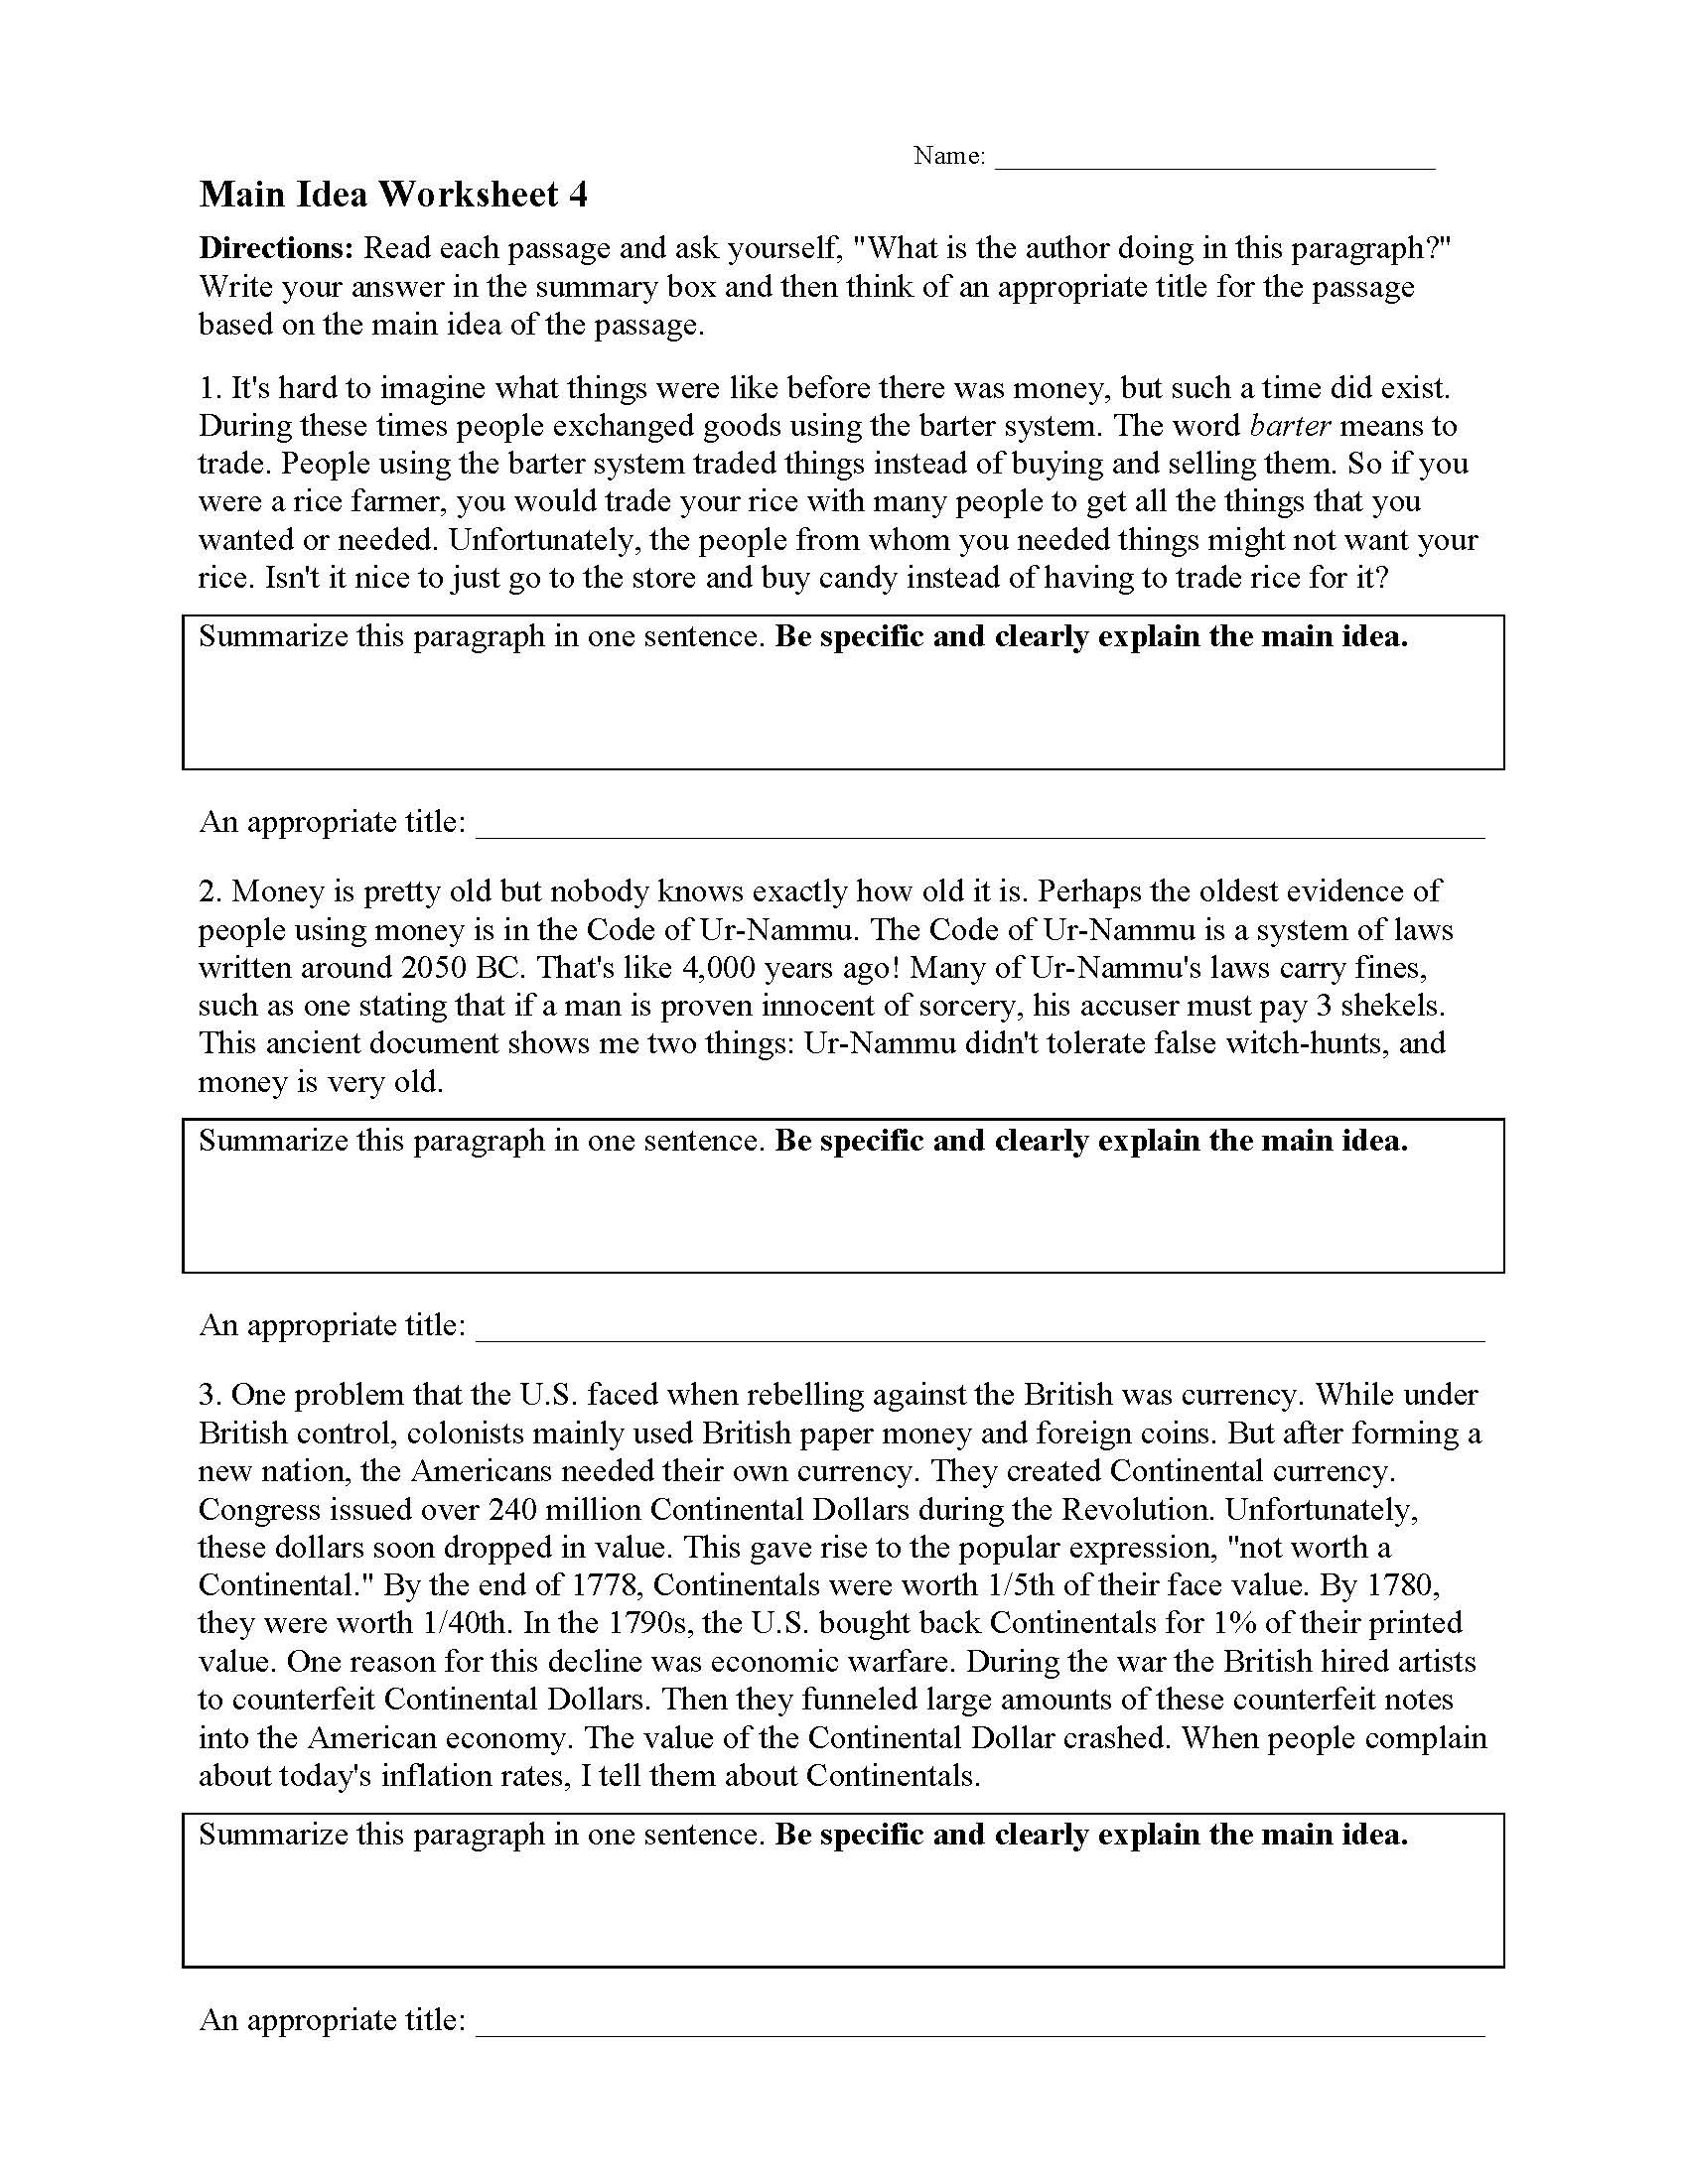 Common Core 4th Grade Main Idea Worksheets CommonWorksheets